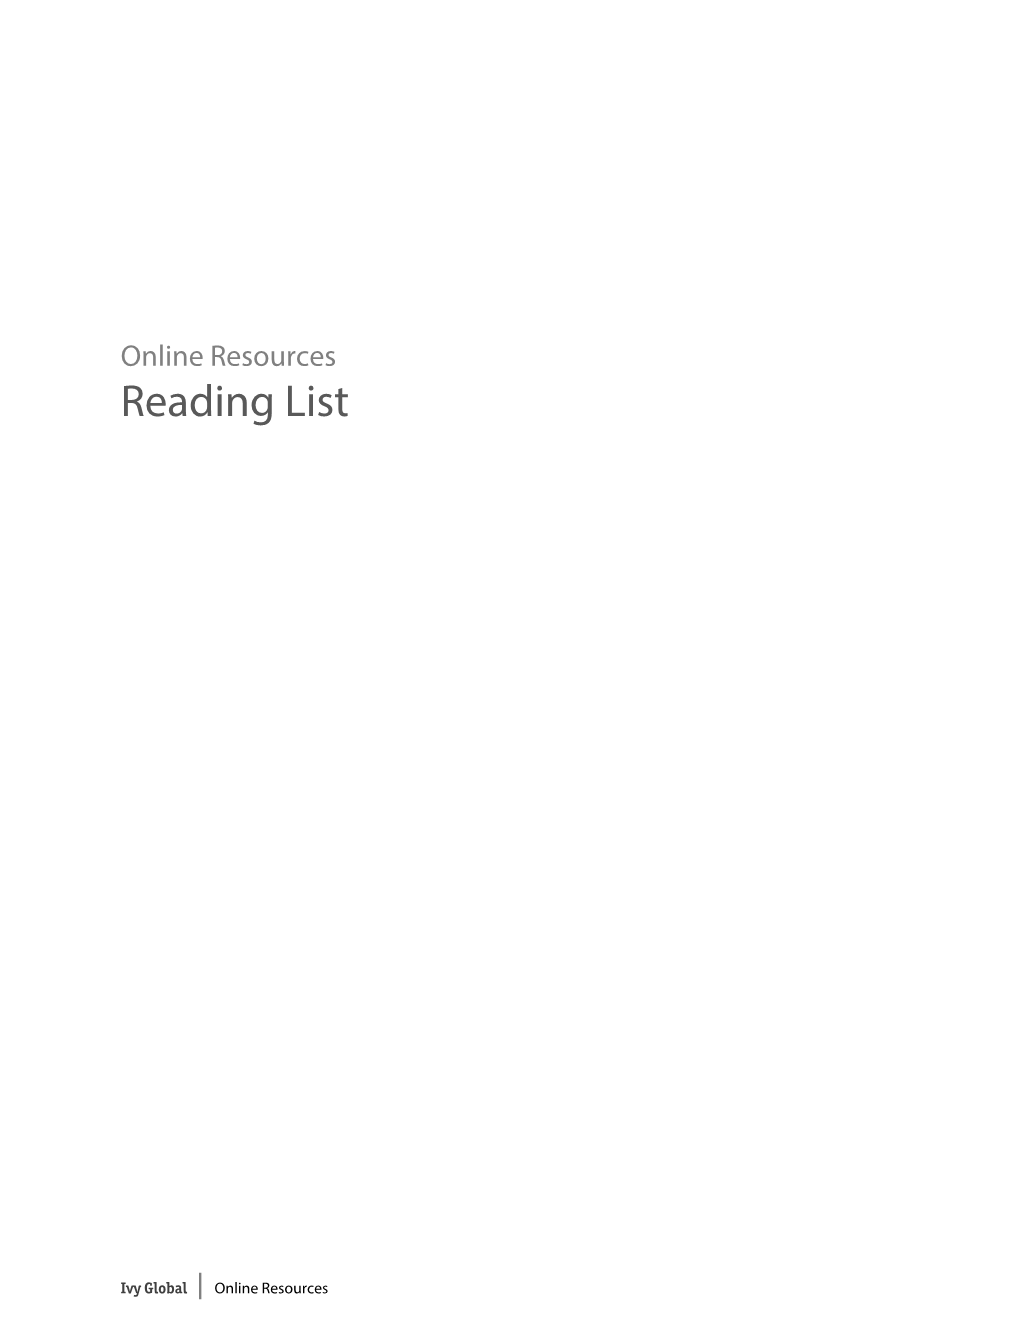 Reading List